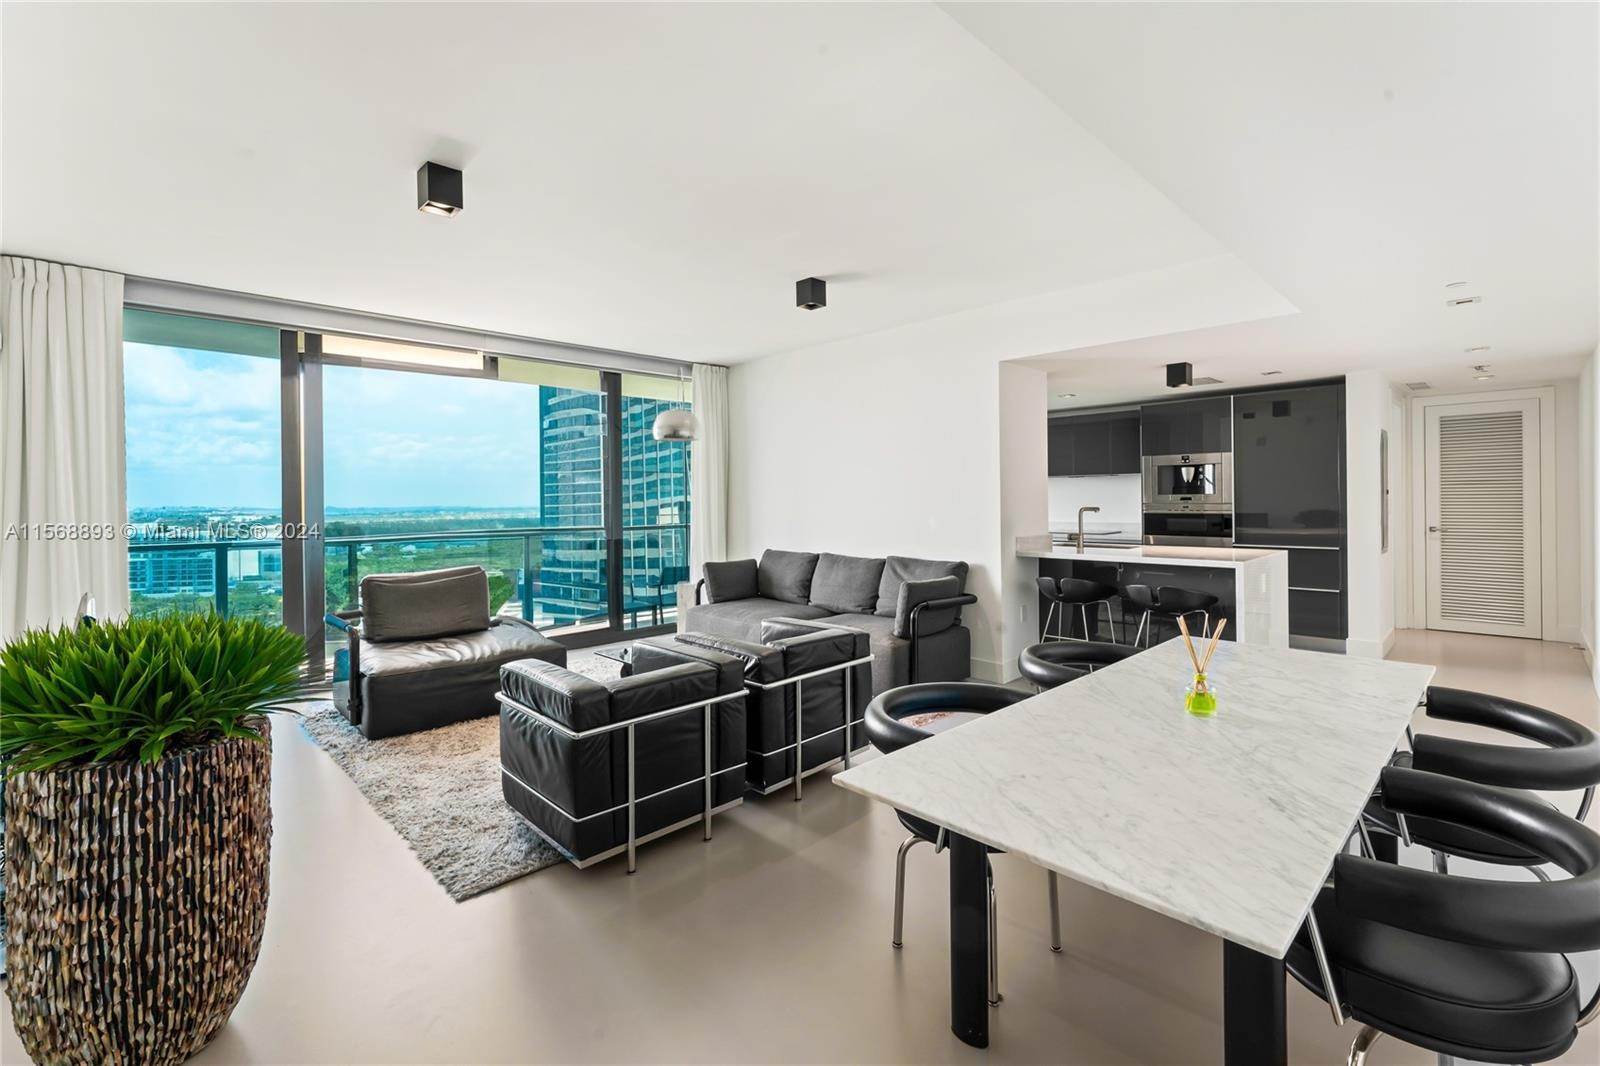 Condominium for Sale at Brickell, Miami, FL 33131